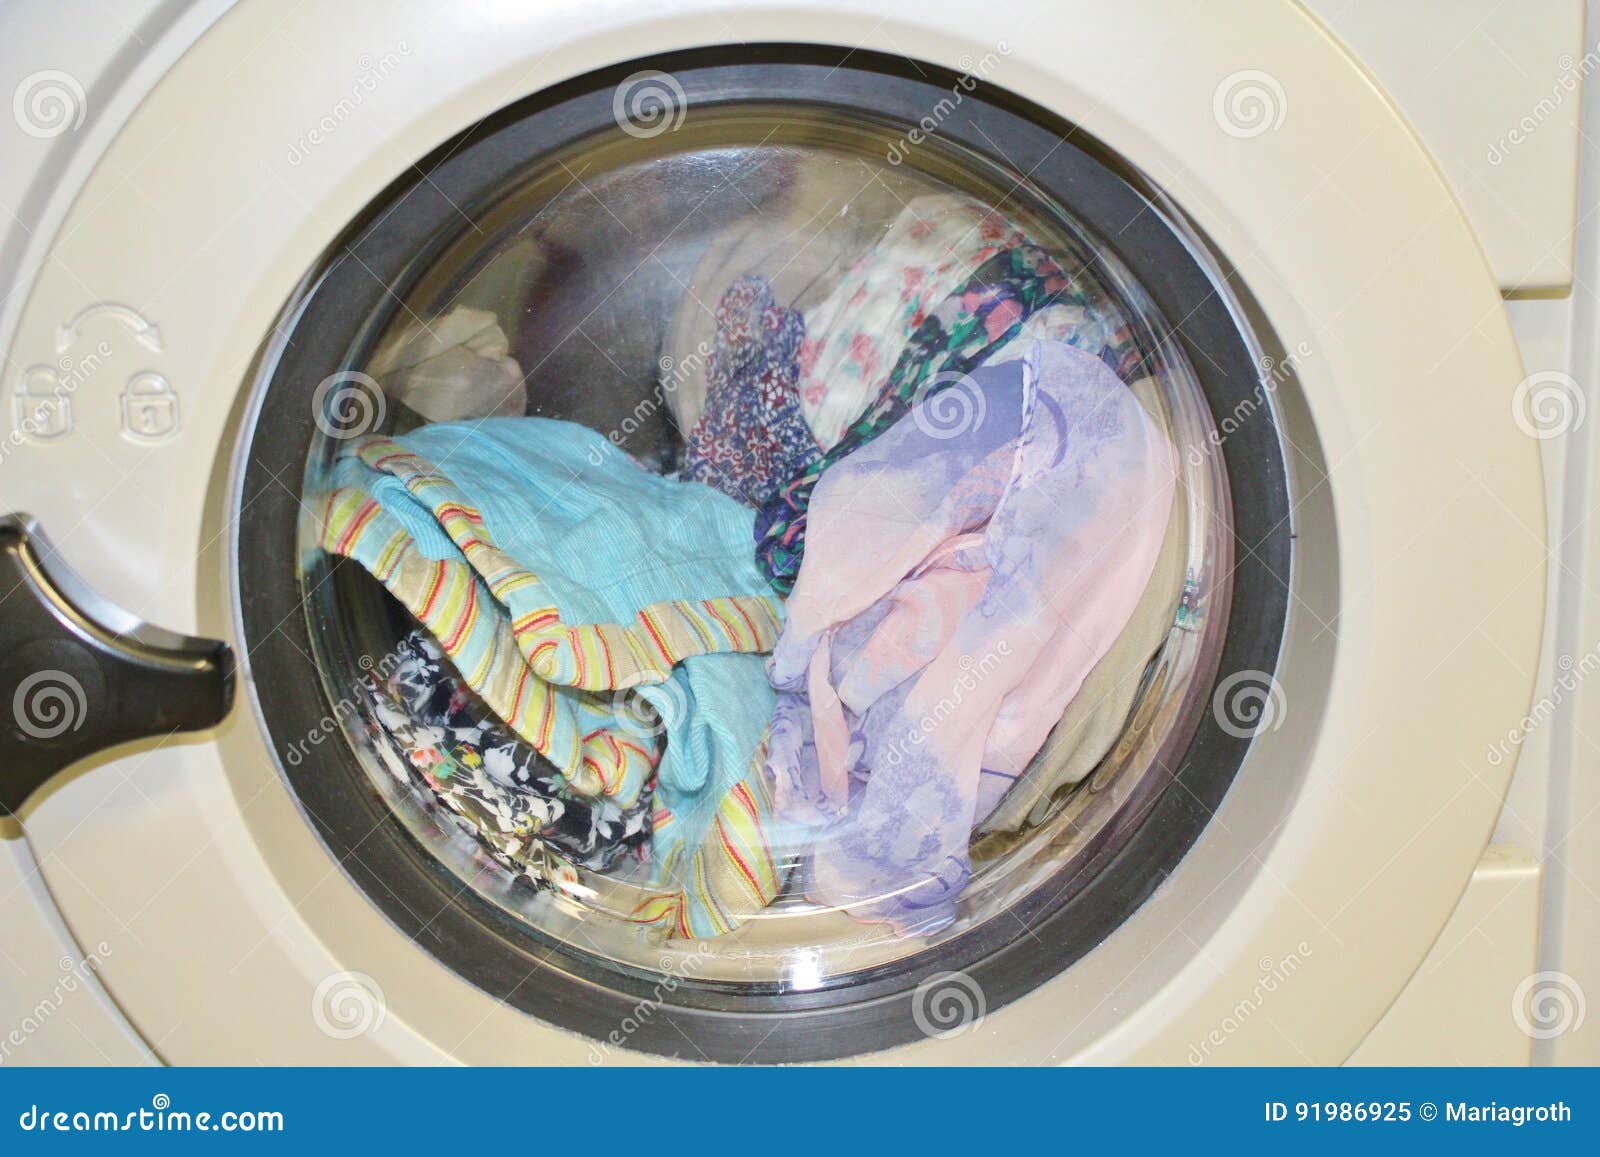 wash in a washing machine